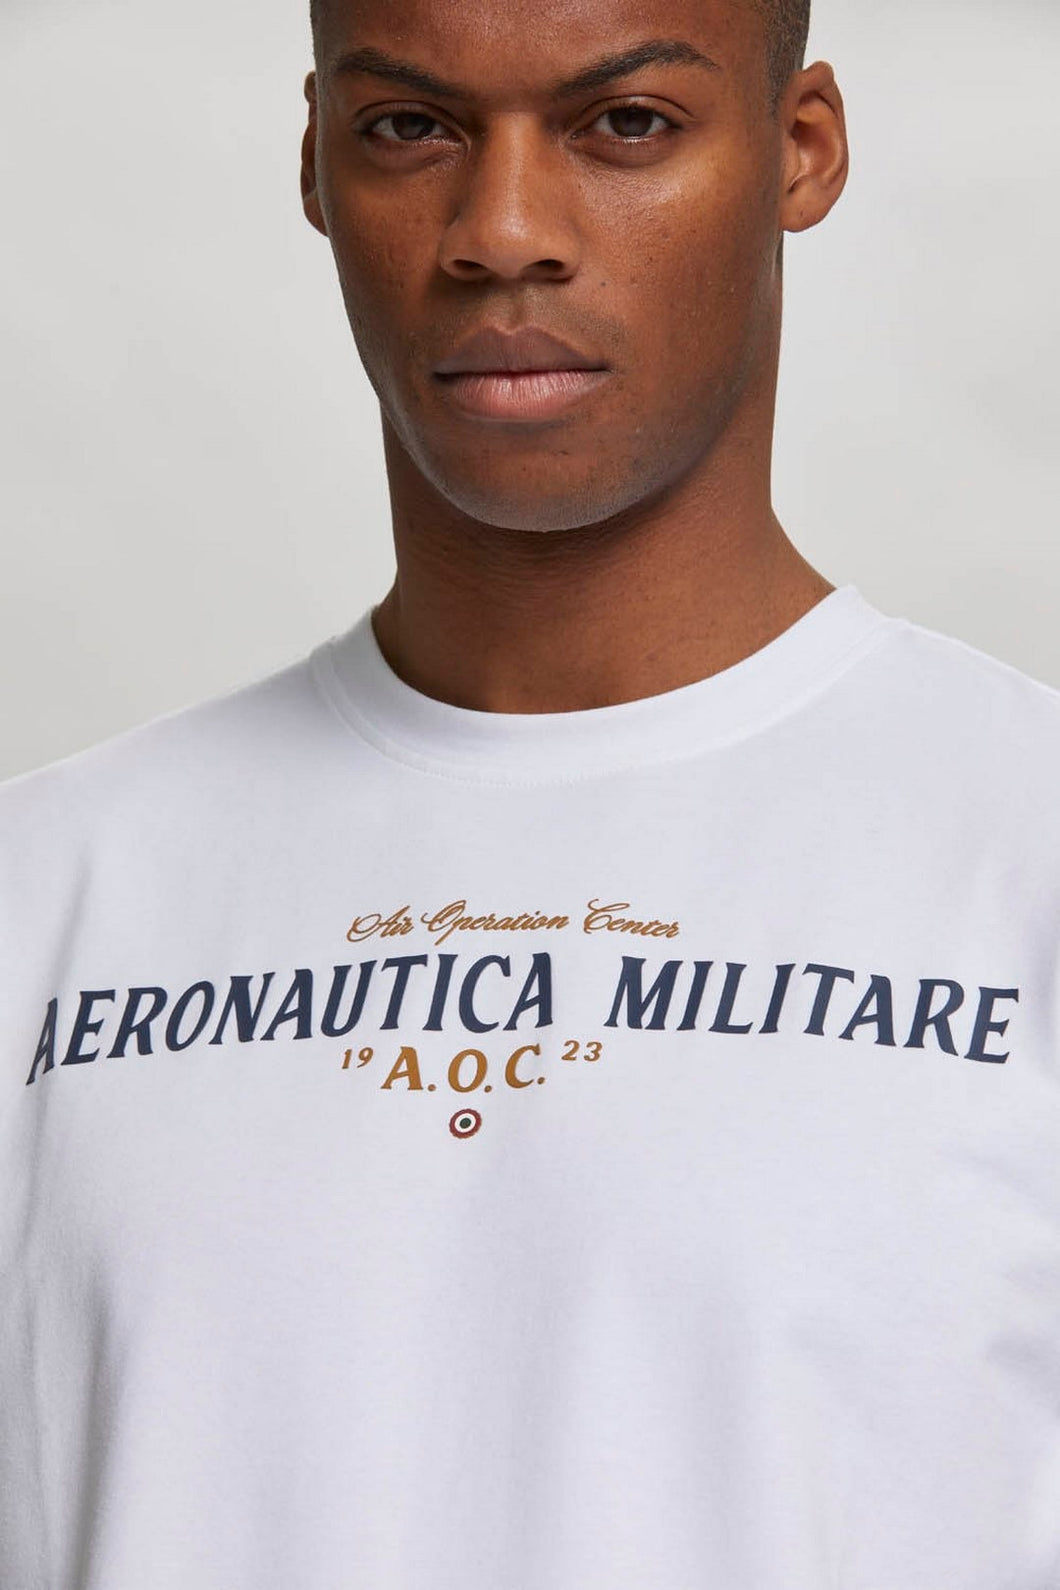 Aeronautica Militare sc-50% t-shirt uomo bianco cotone Made in Italy